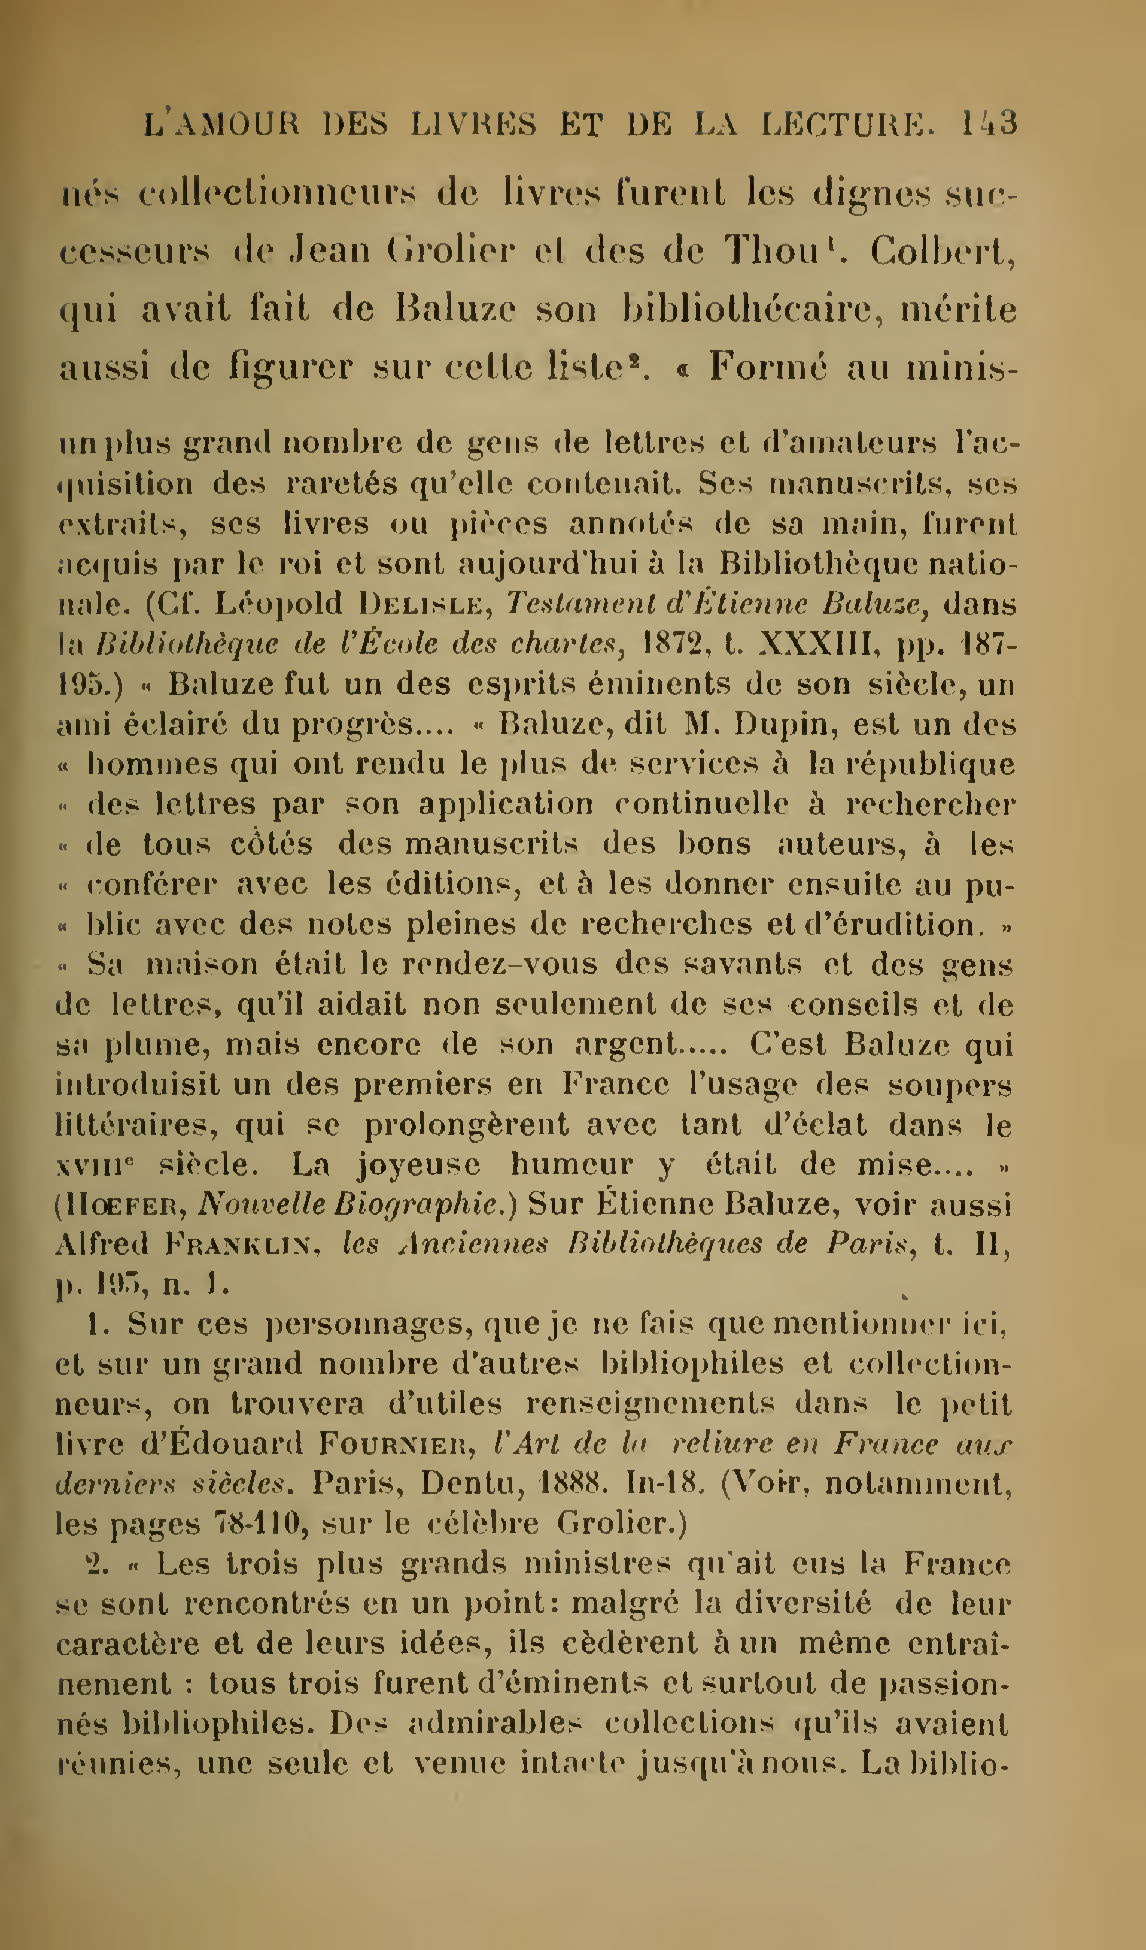 Albert Cim, Le Livre, t. I, p. 143.